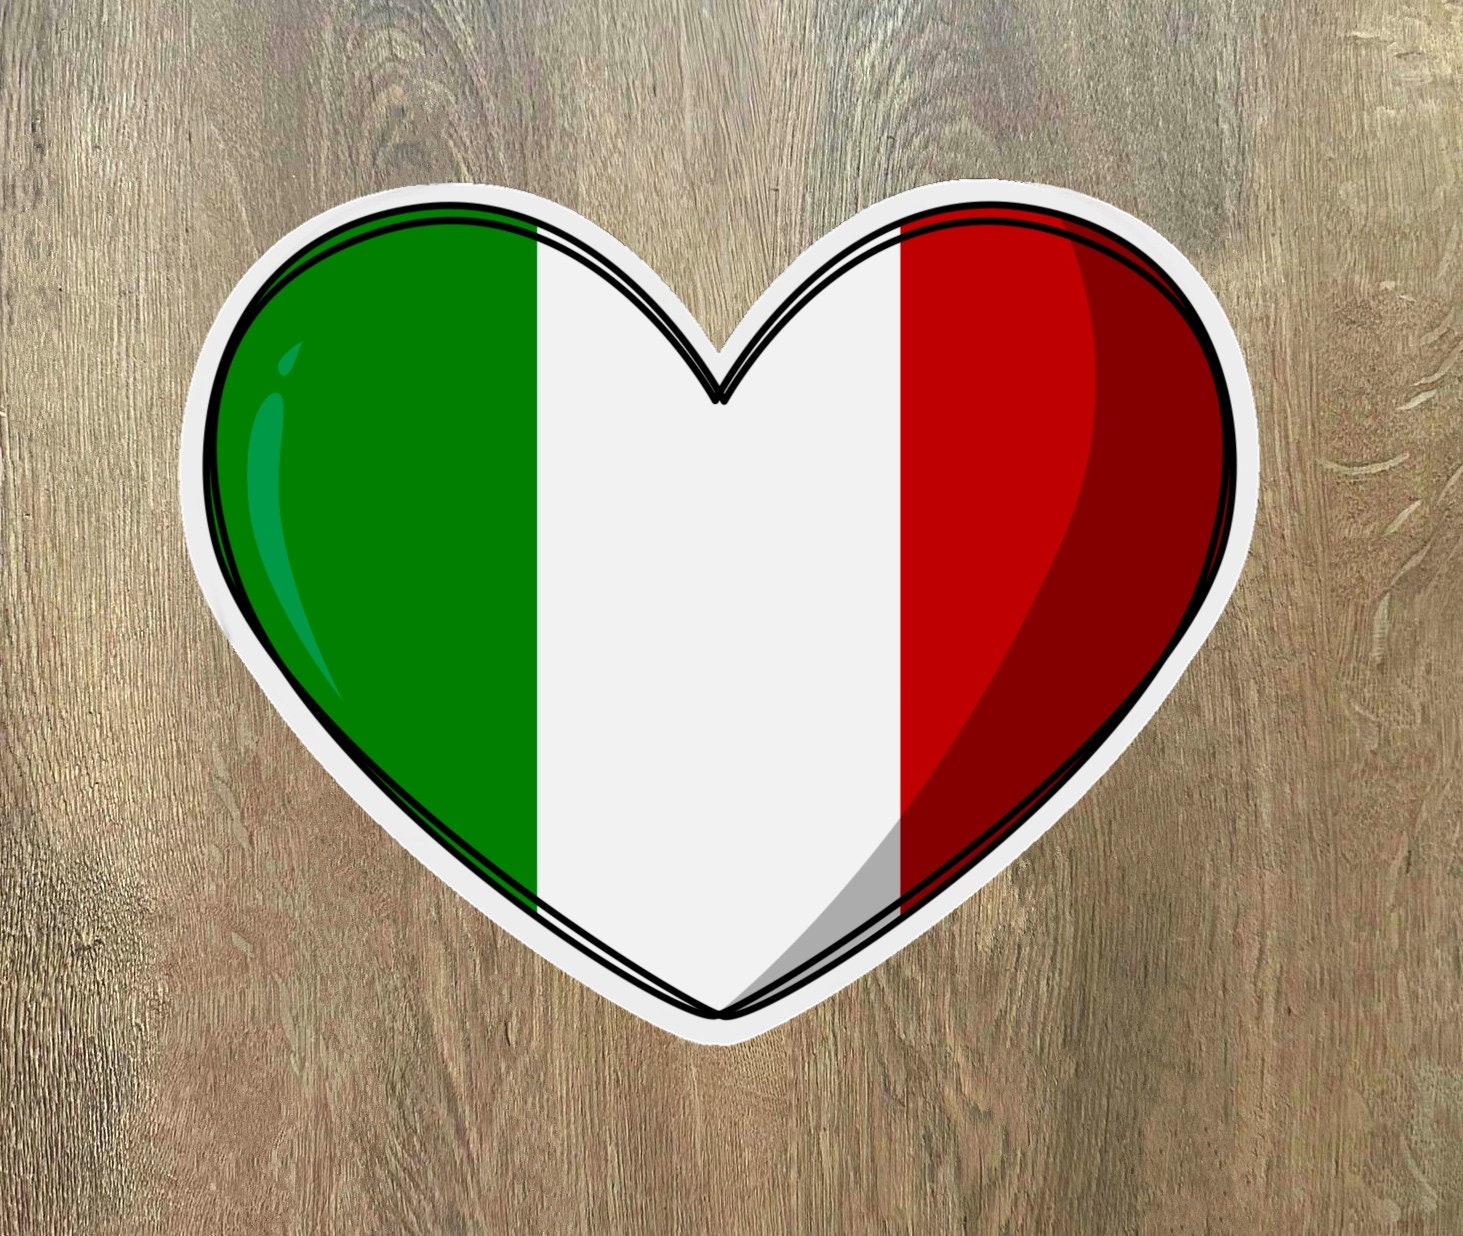 Aufkleber Auf Auto Fahne Italien Italienische Republik Stock